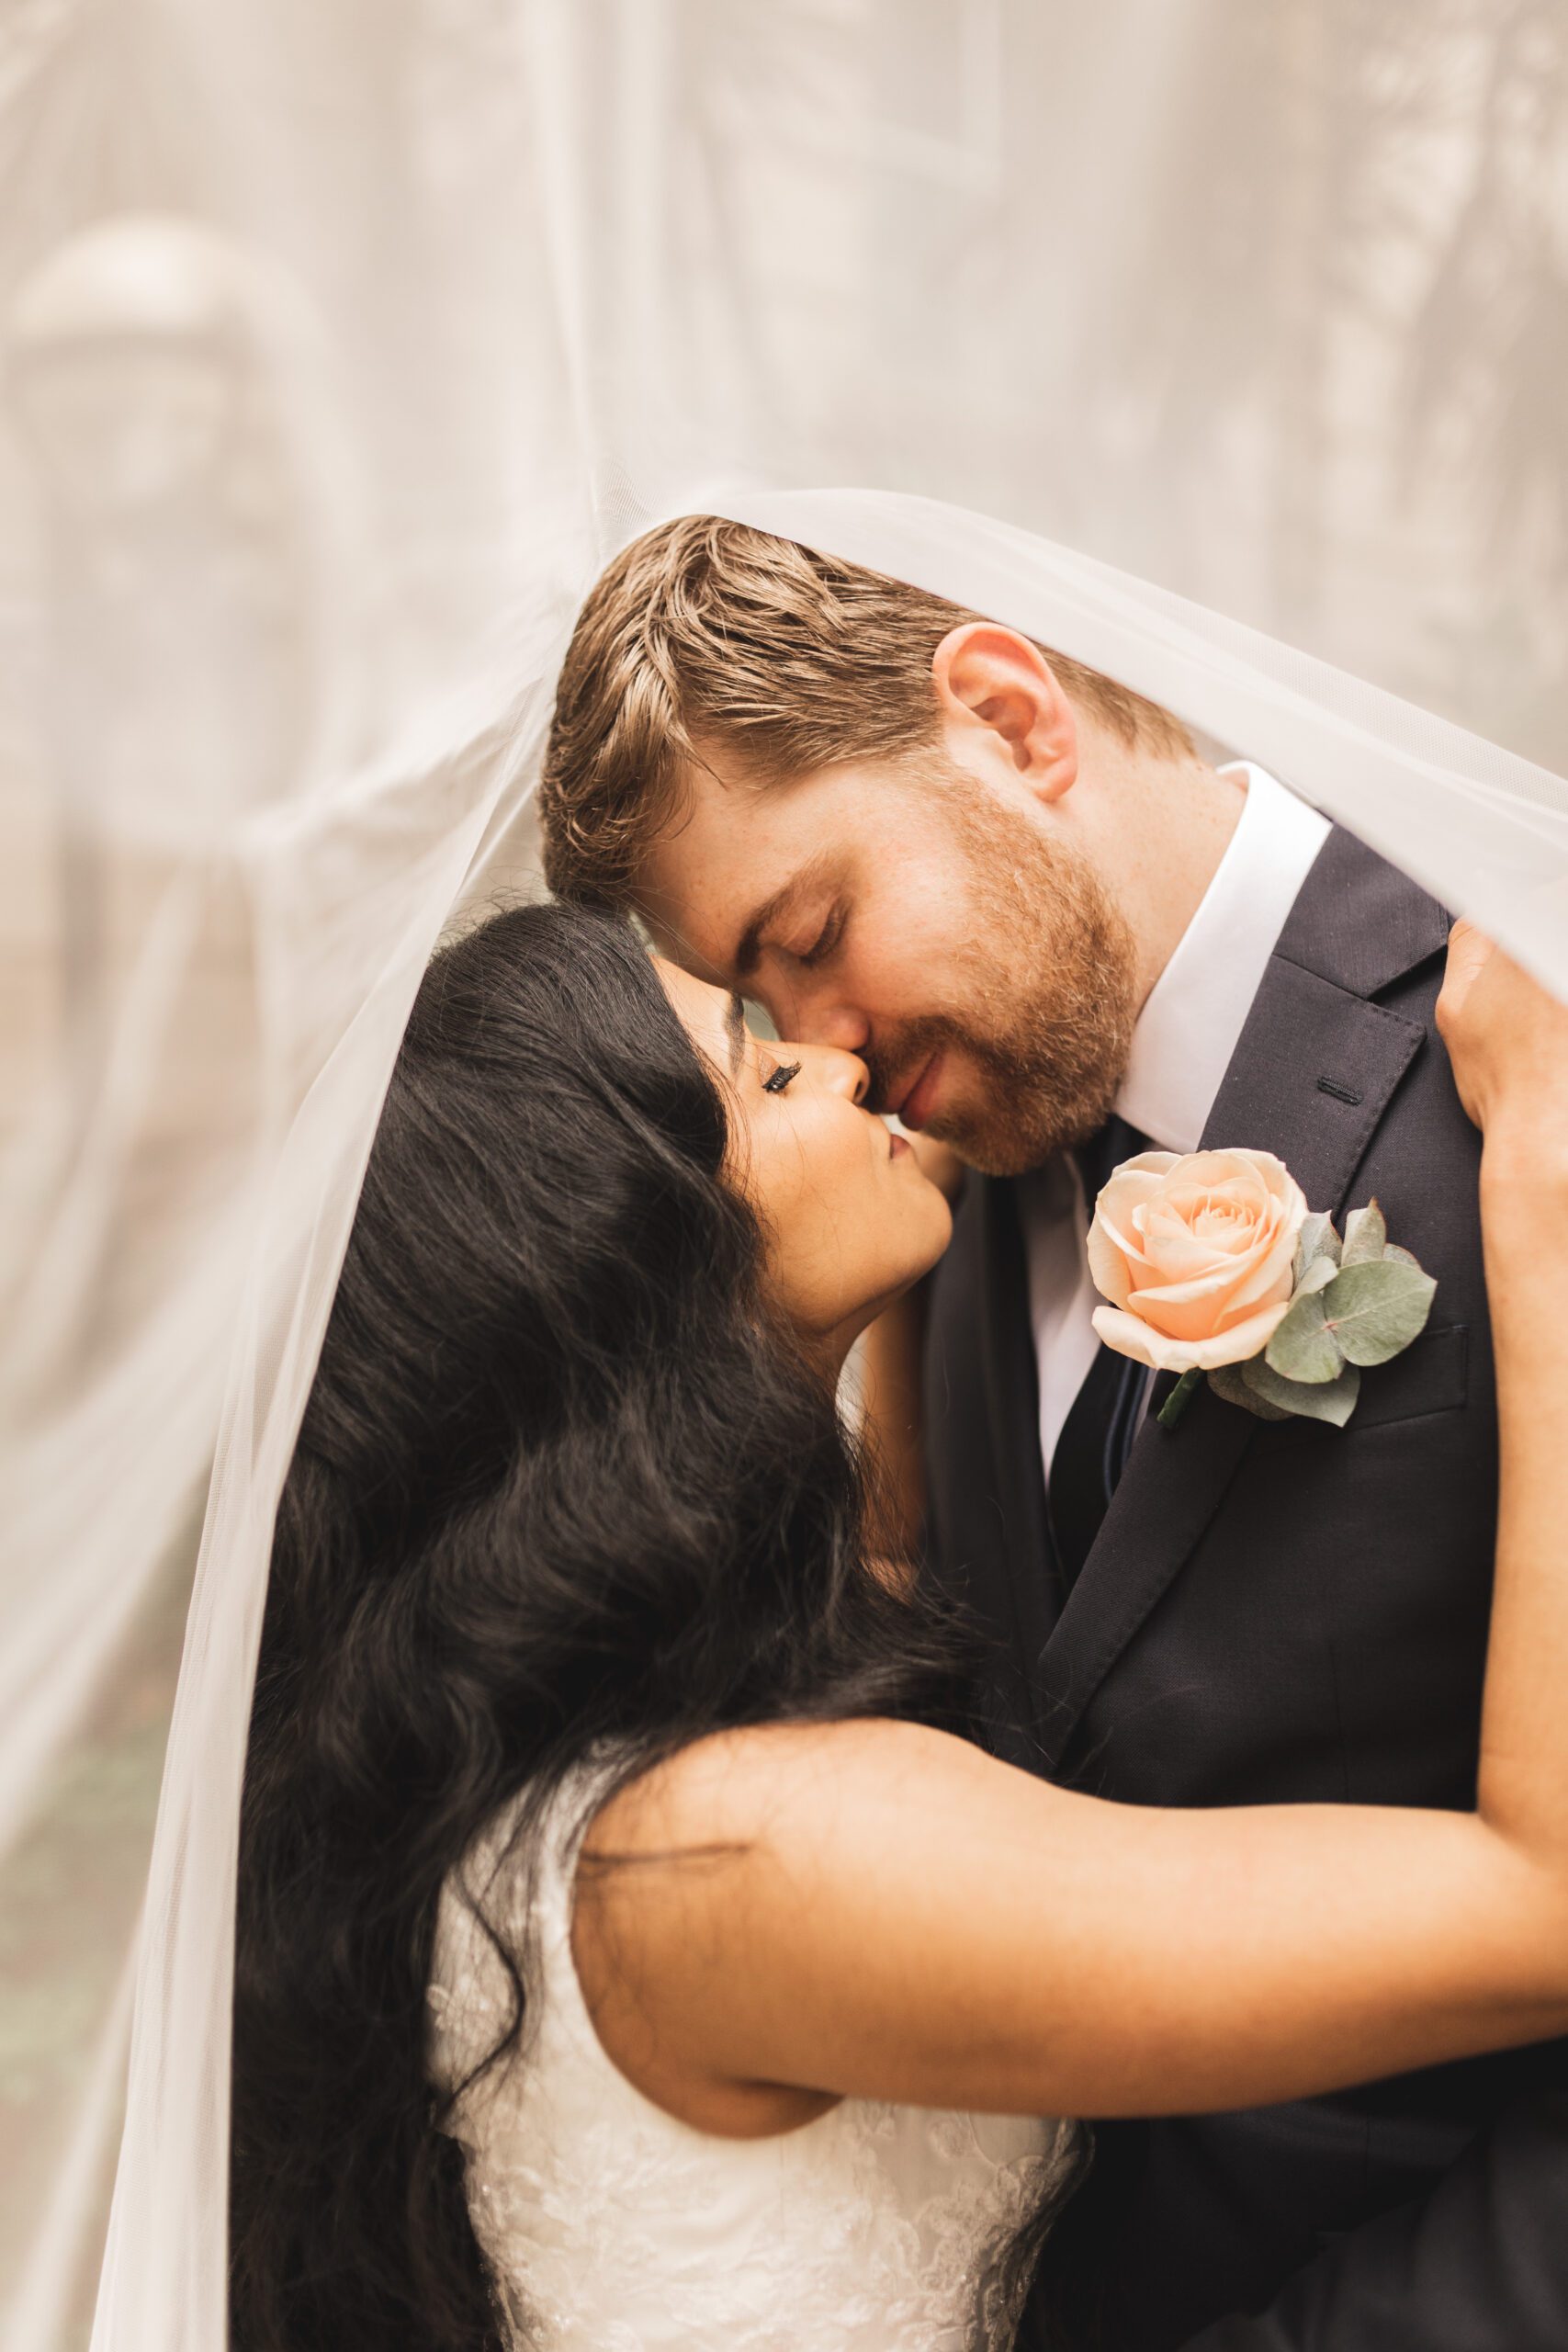 Bride and groom kiss under veil at Bristol hotel wedding